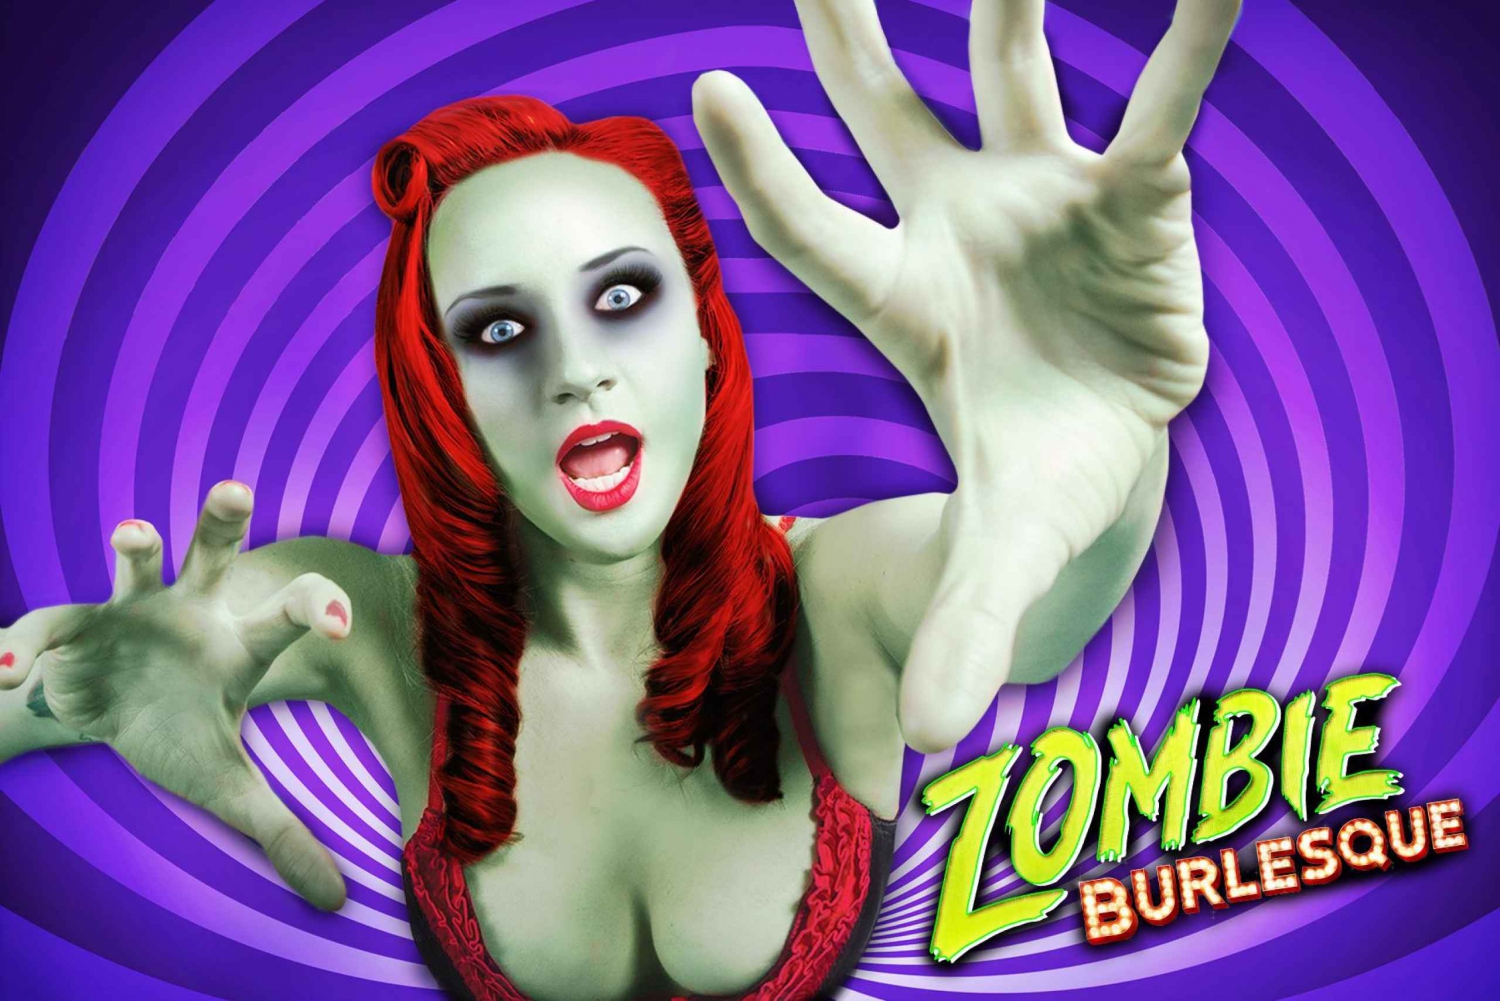 Las Vegasissa: Zombi Burleski Komedia Musikaali Show Lippu: Zombie Burleski Komedia Musikaali Show Lippu